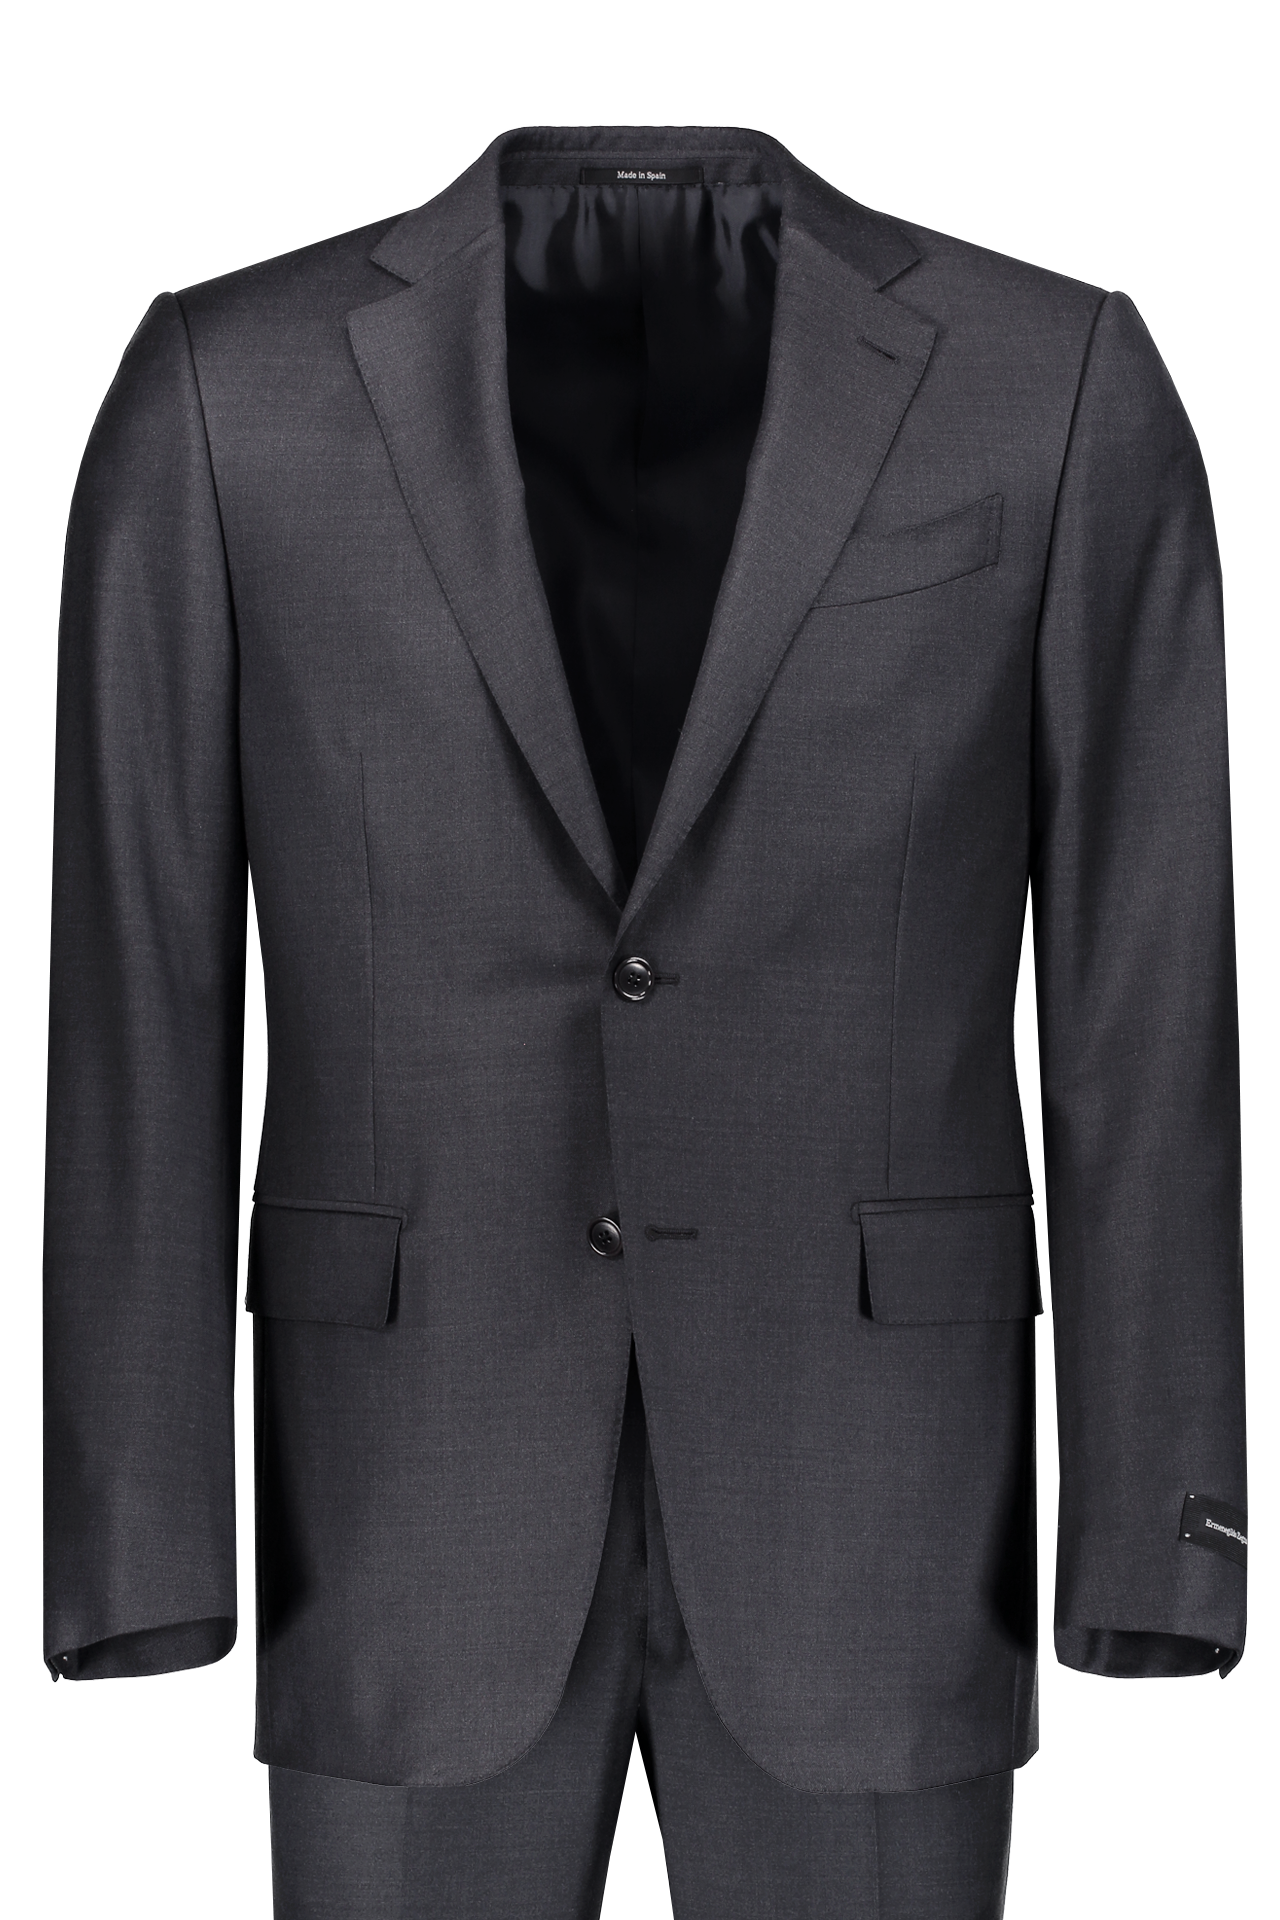 Trofeo Milano Suit (600688820235)